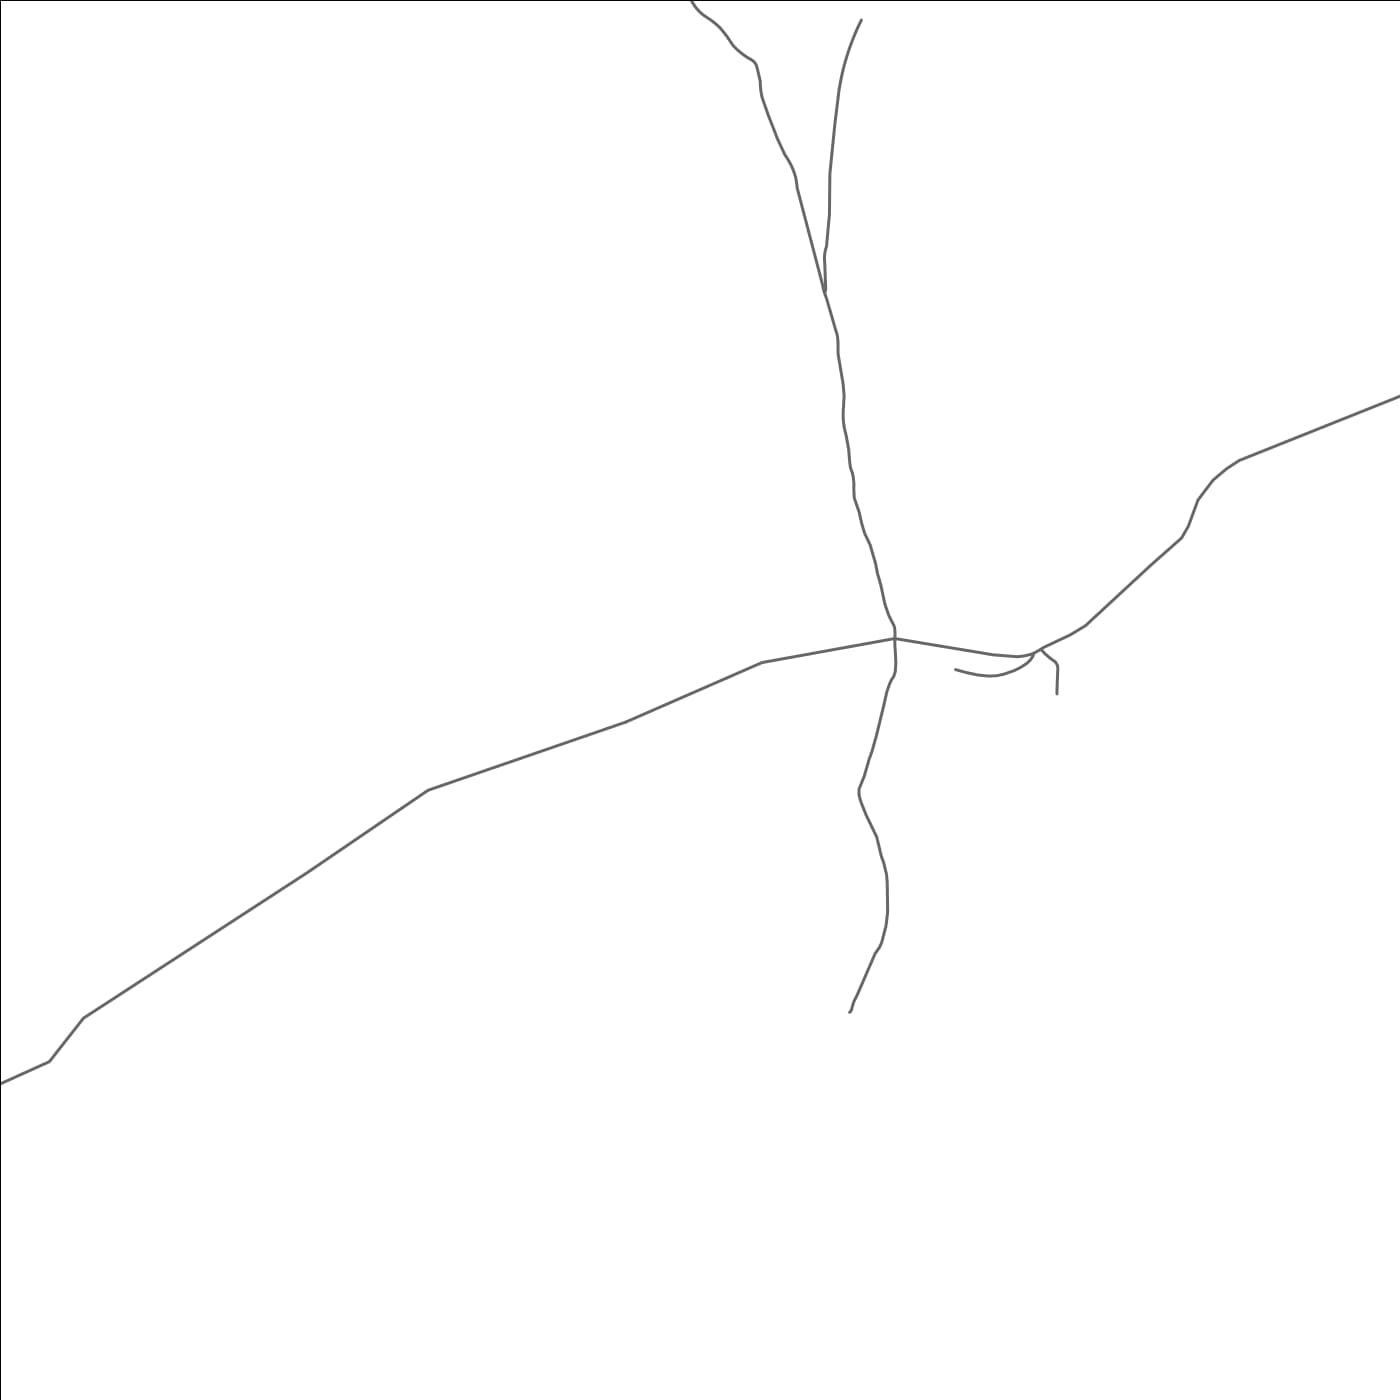 ROAD MAP OF SAWARIWAUNAWA, GUYANA BY MAPBAKES